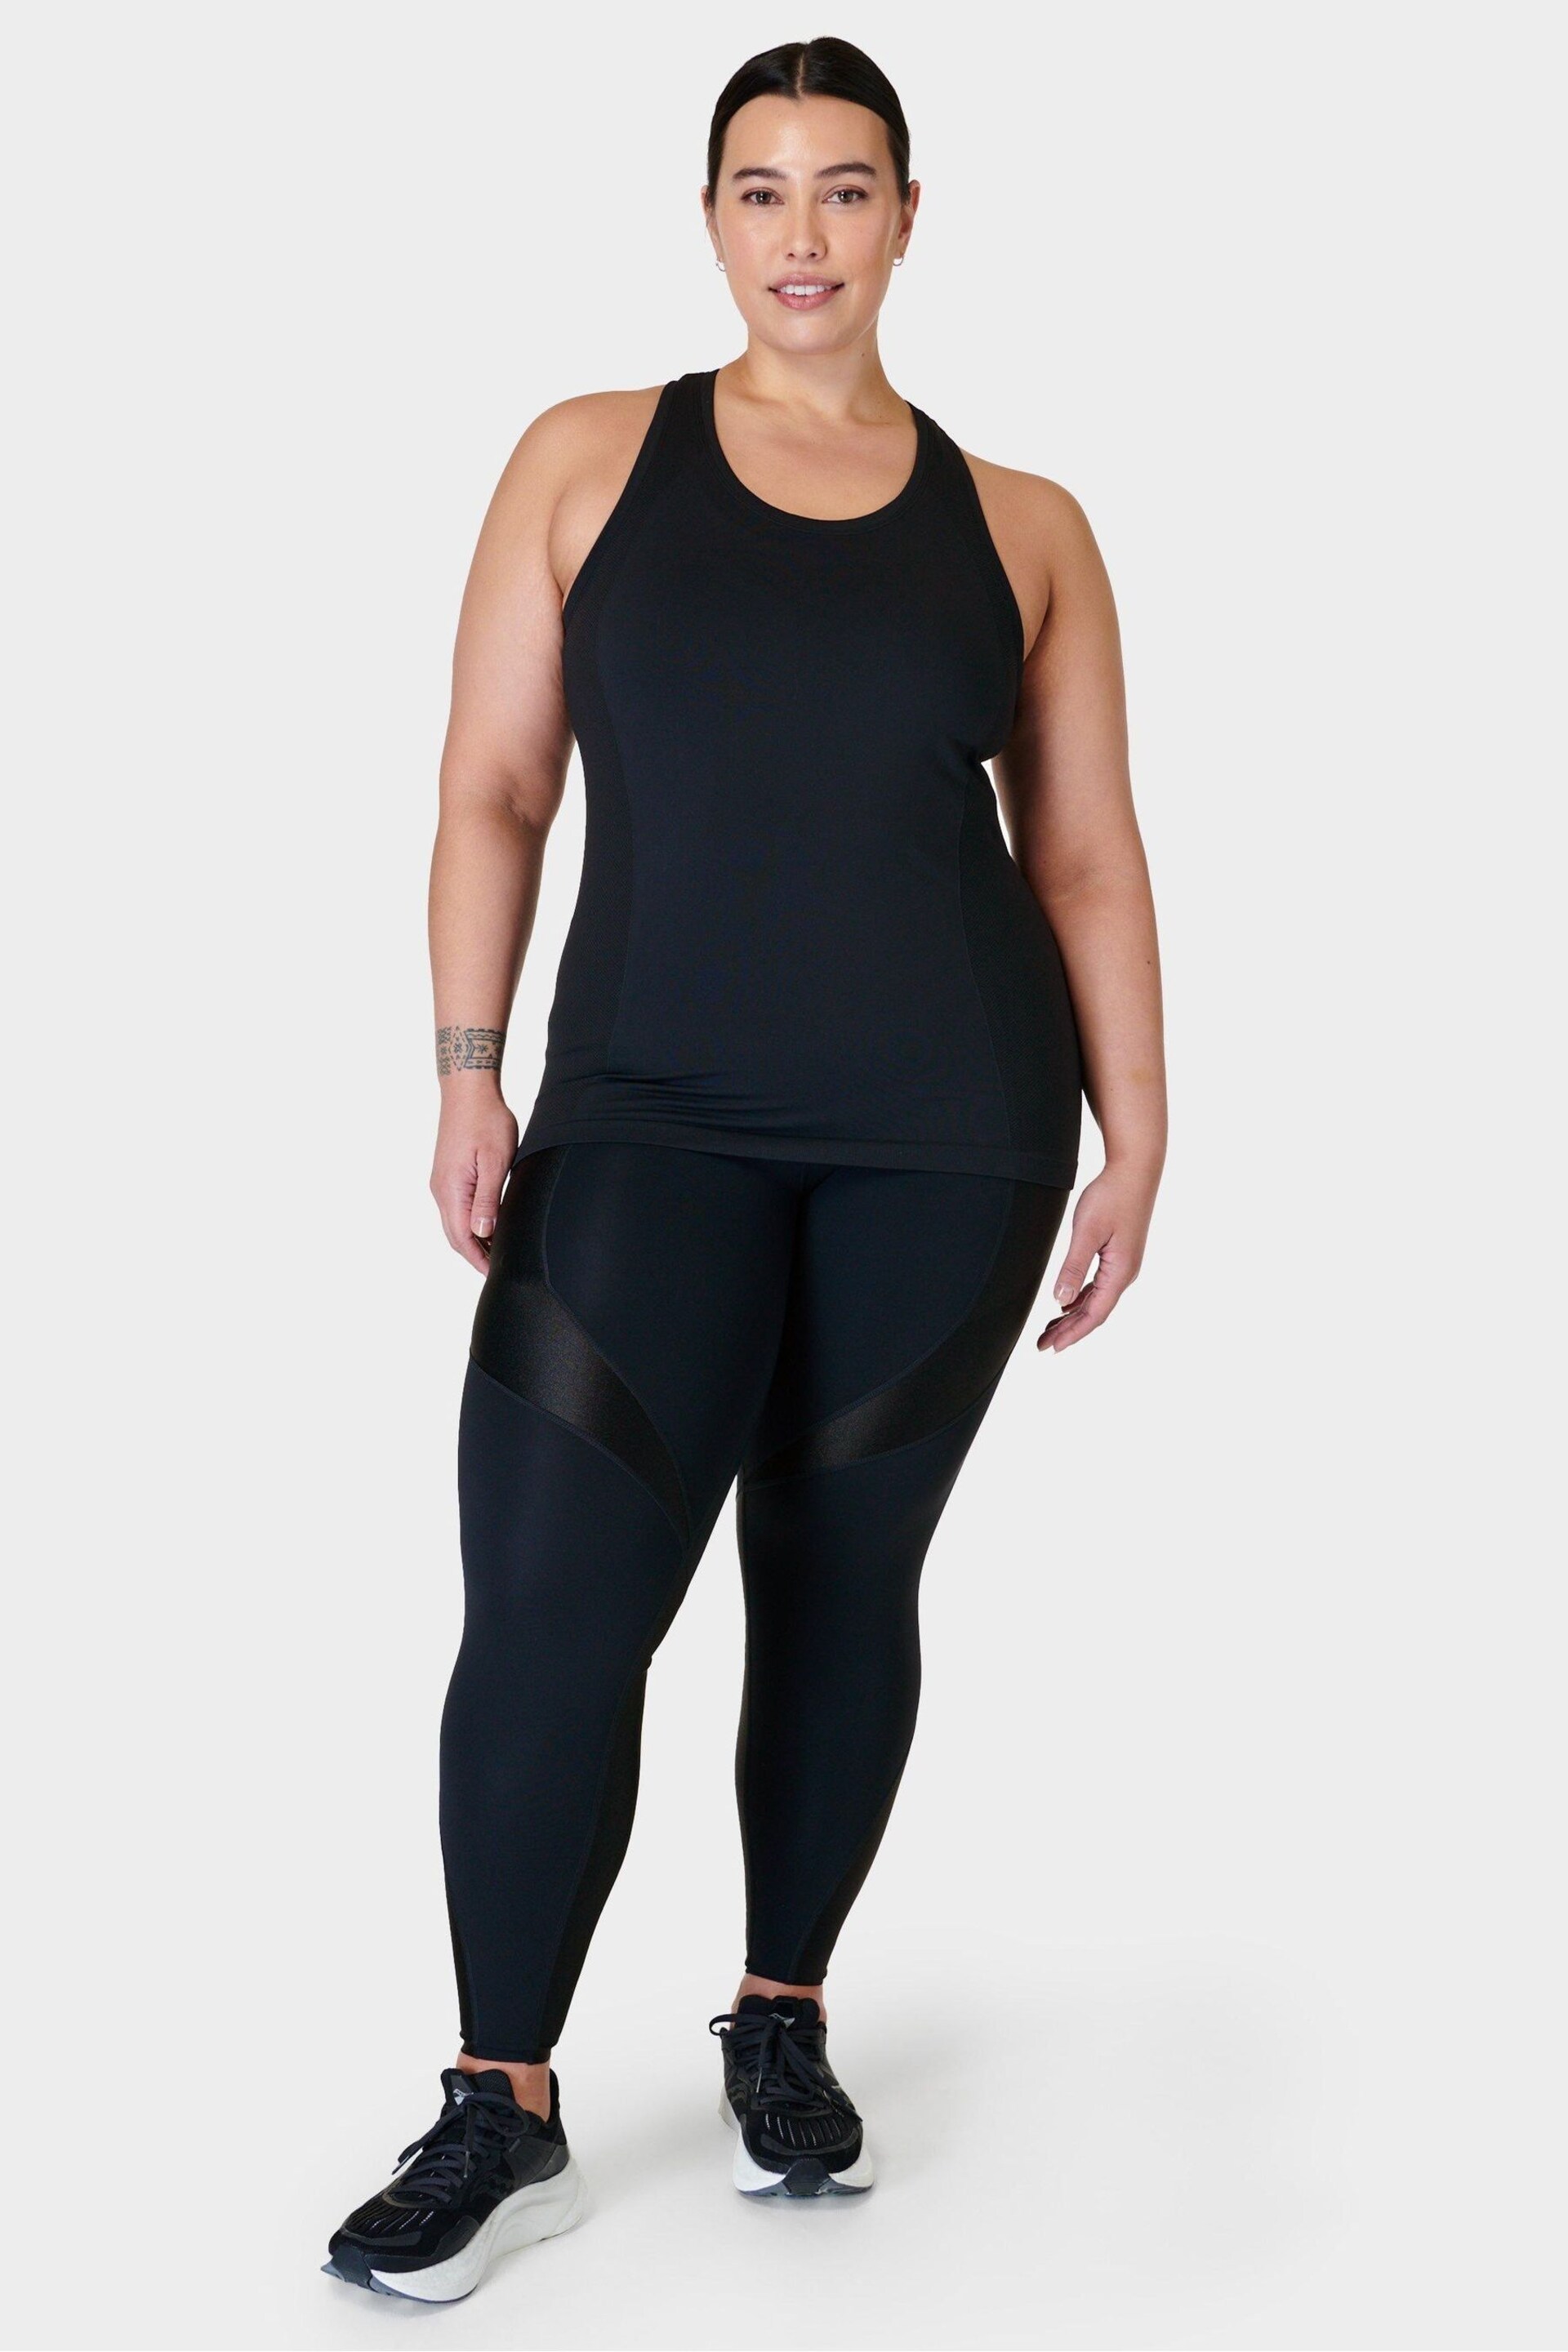 Sweaty Betty Black Athlete Seamless Workout Tank Top - Image 4 of 6